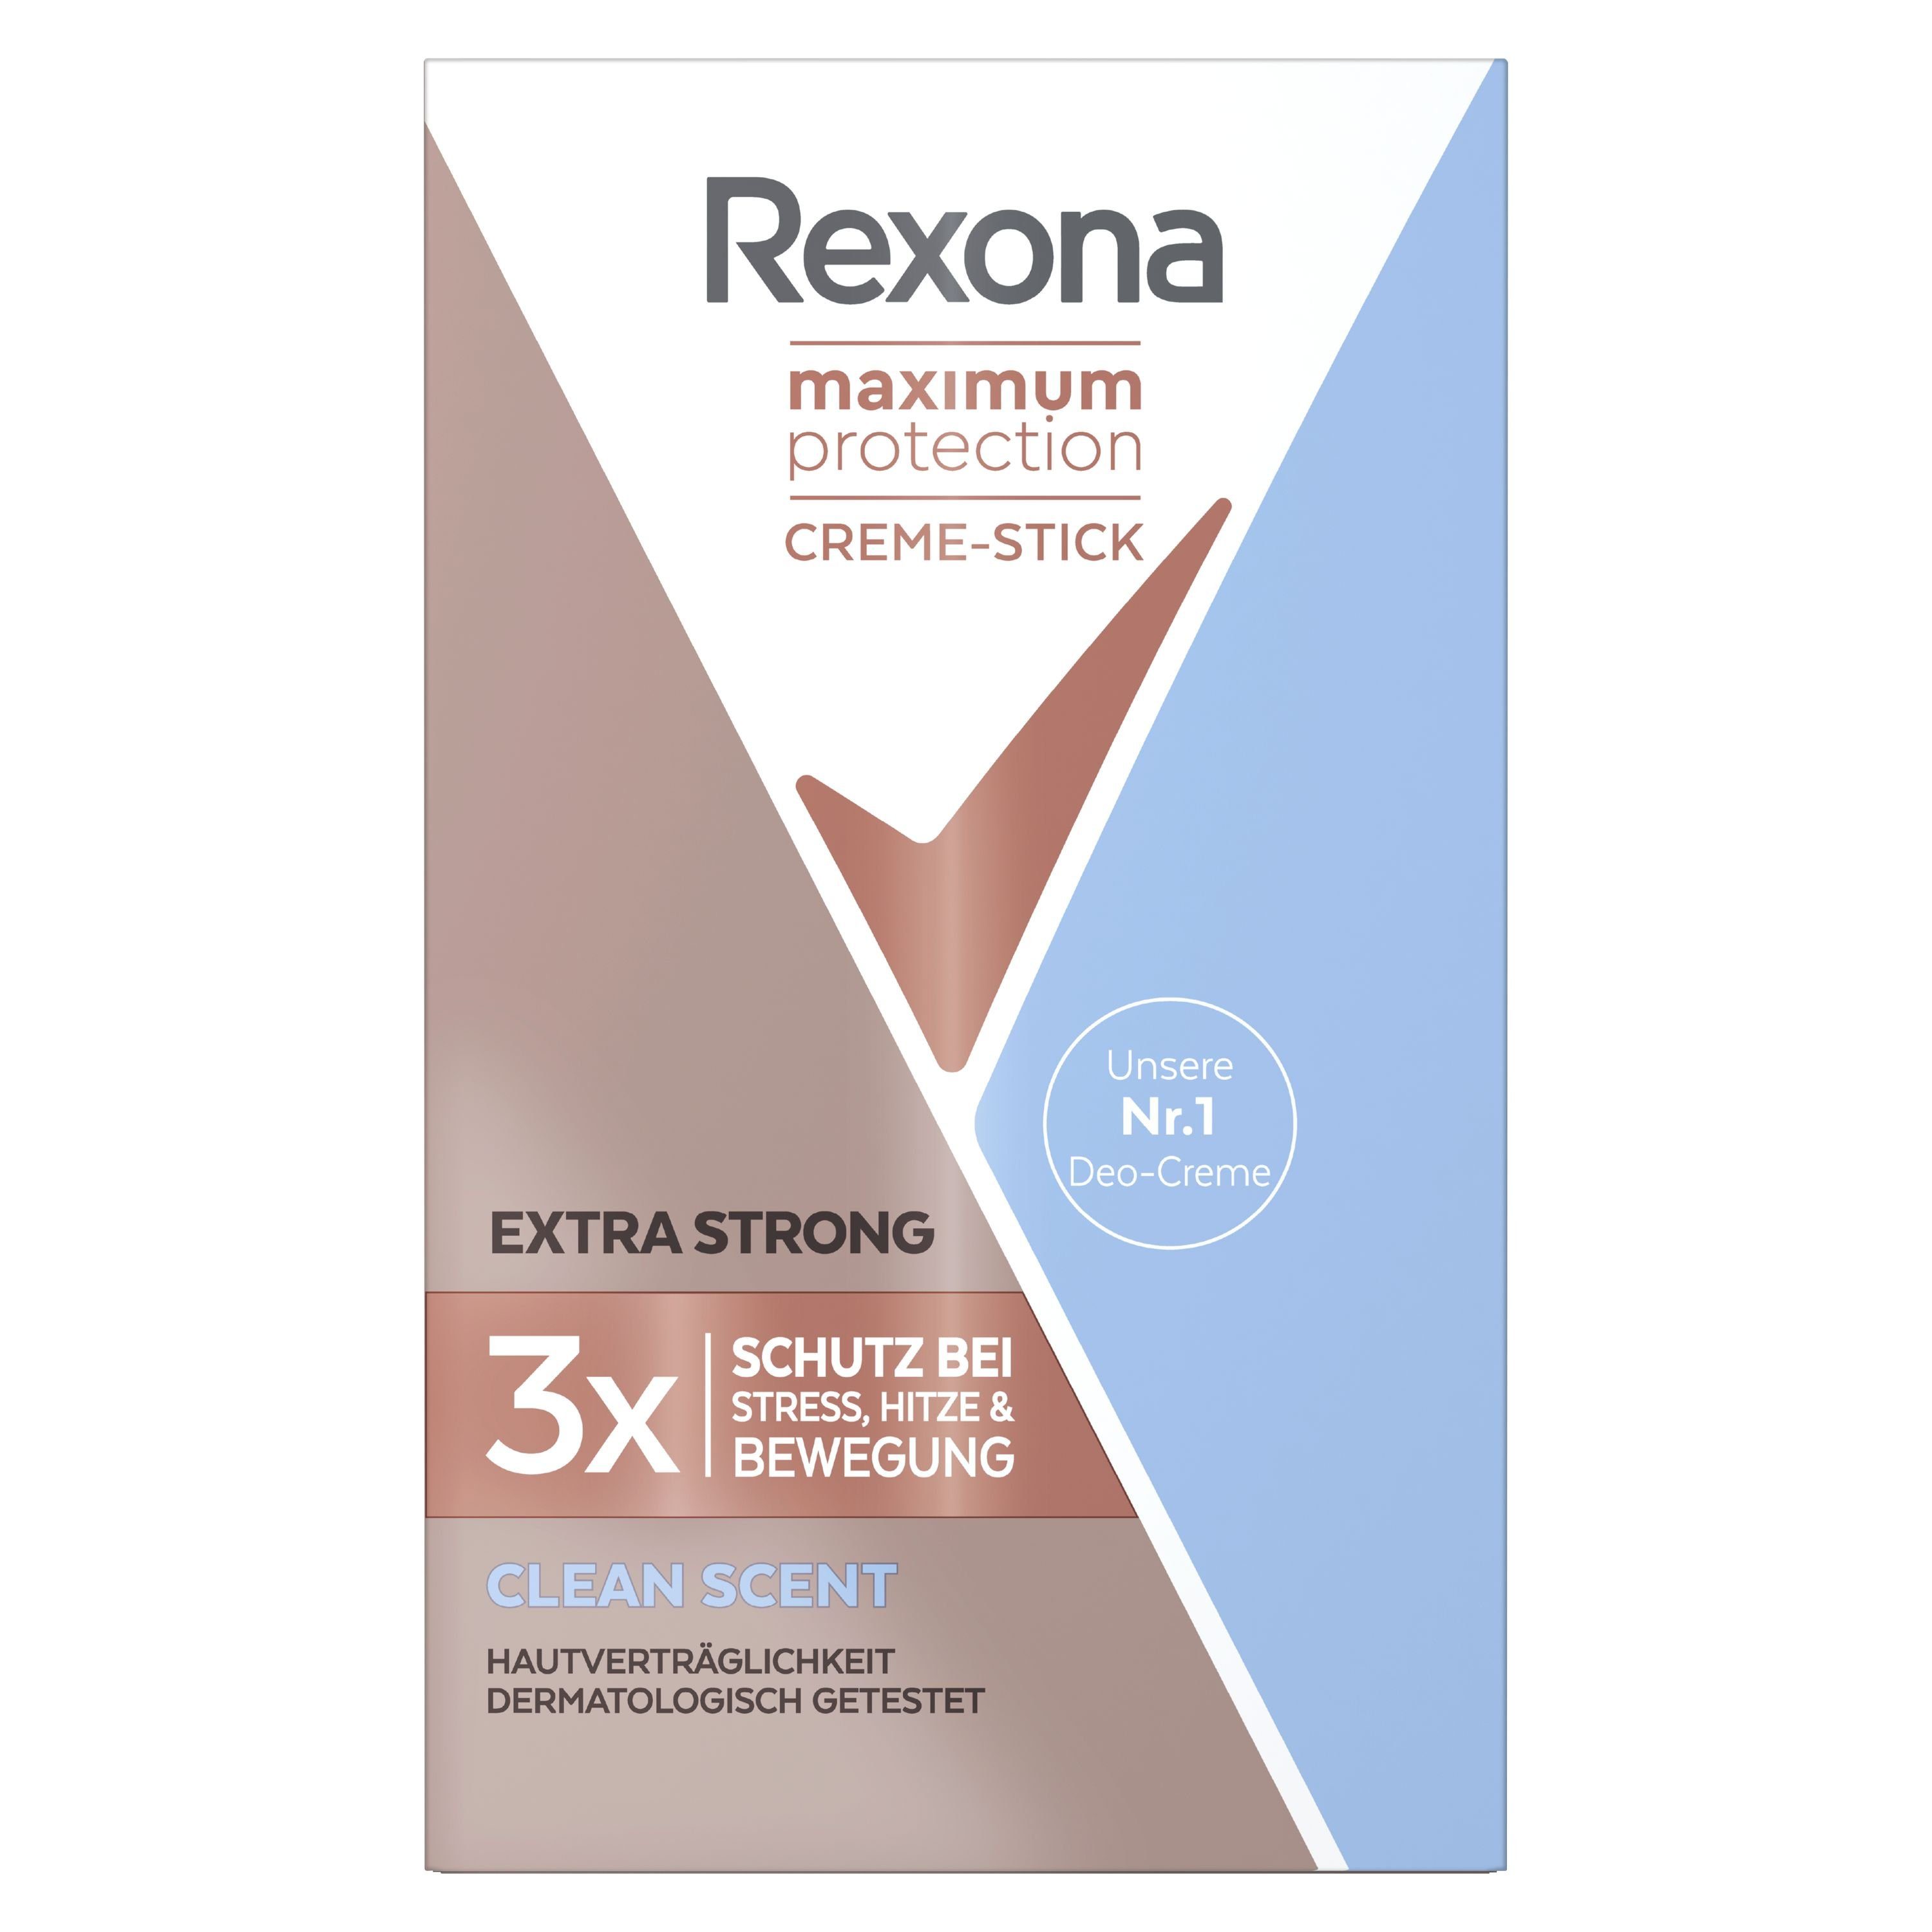 Maximum 6x Clean Deo-Set Creme Deo 45ml Scent Protection Anti-Transpirant Rexona